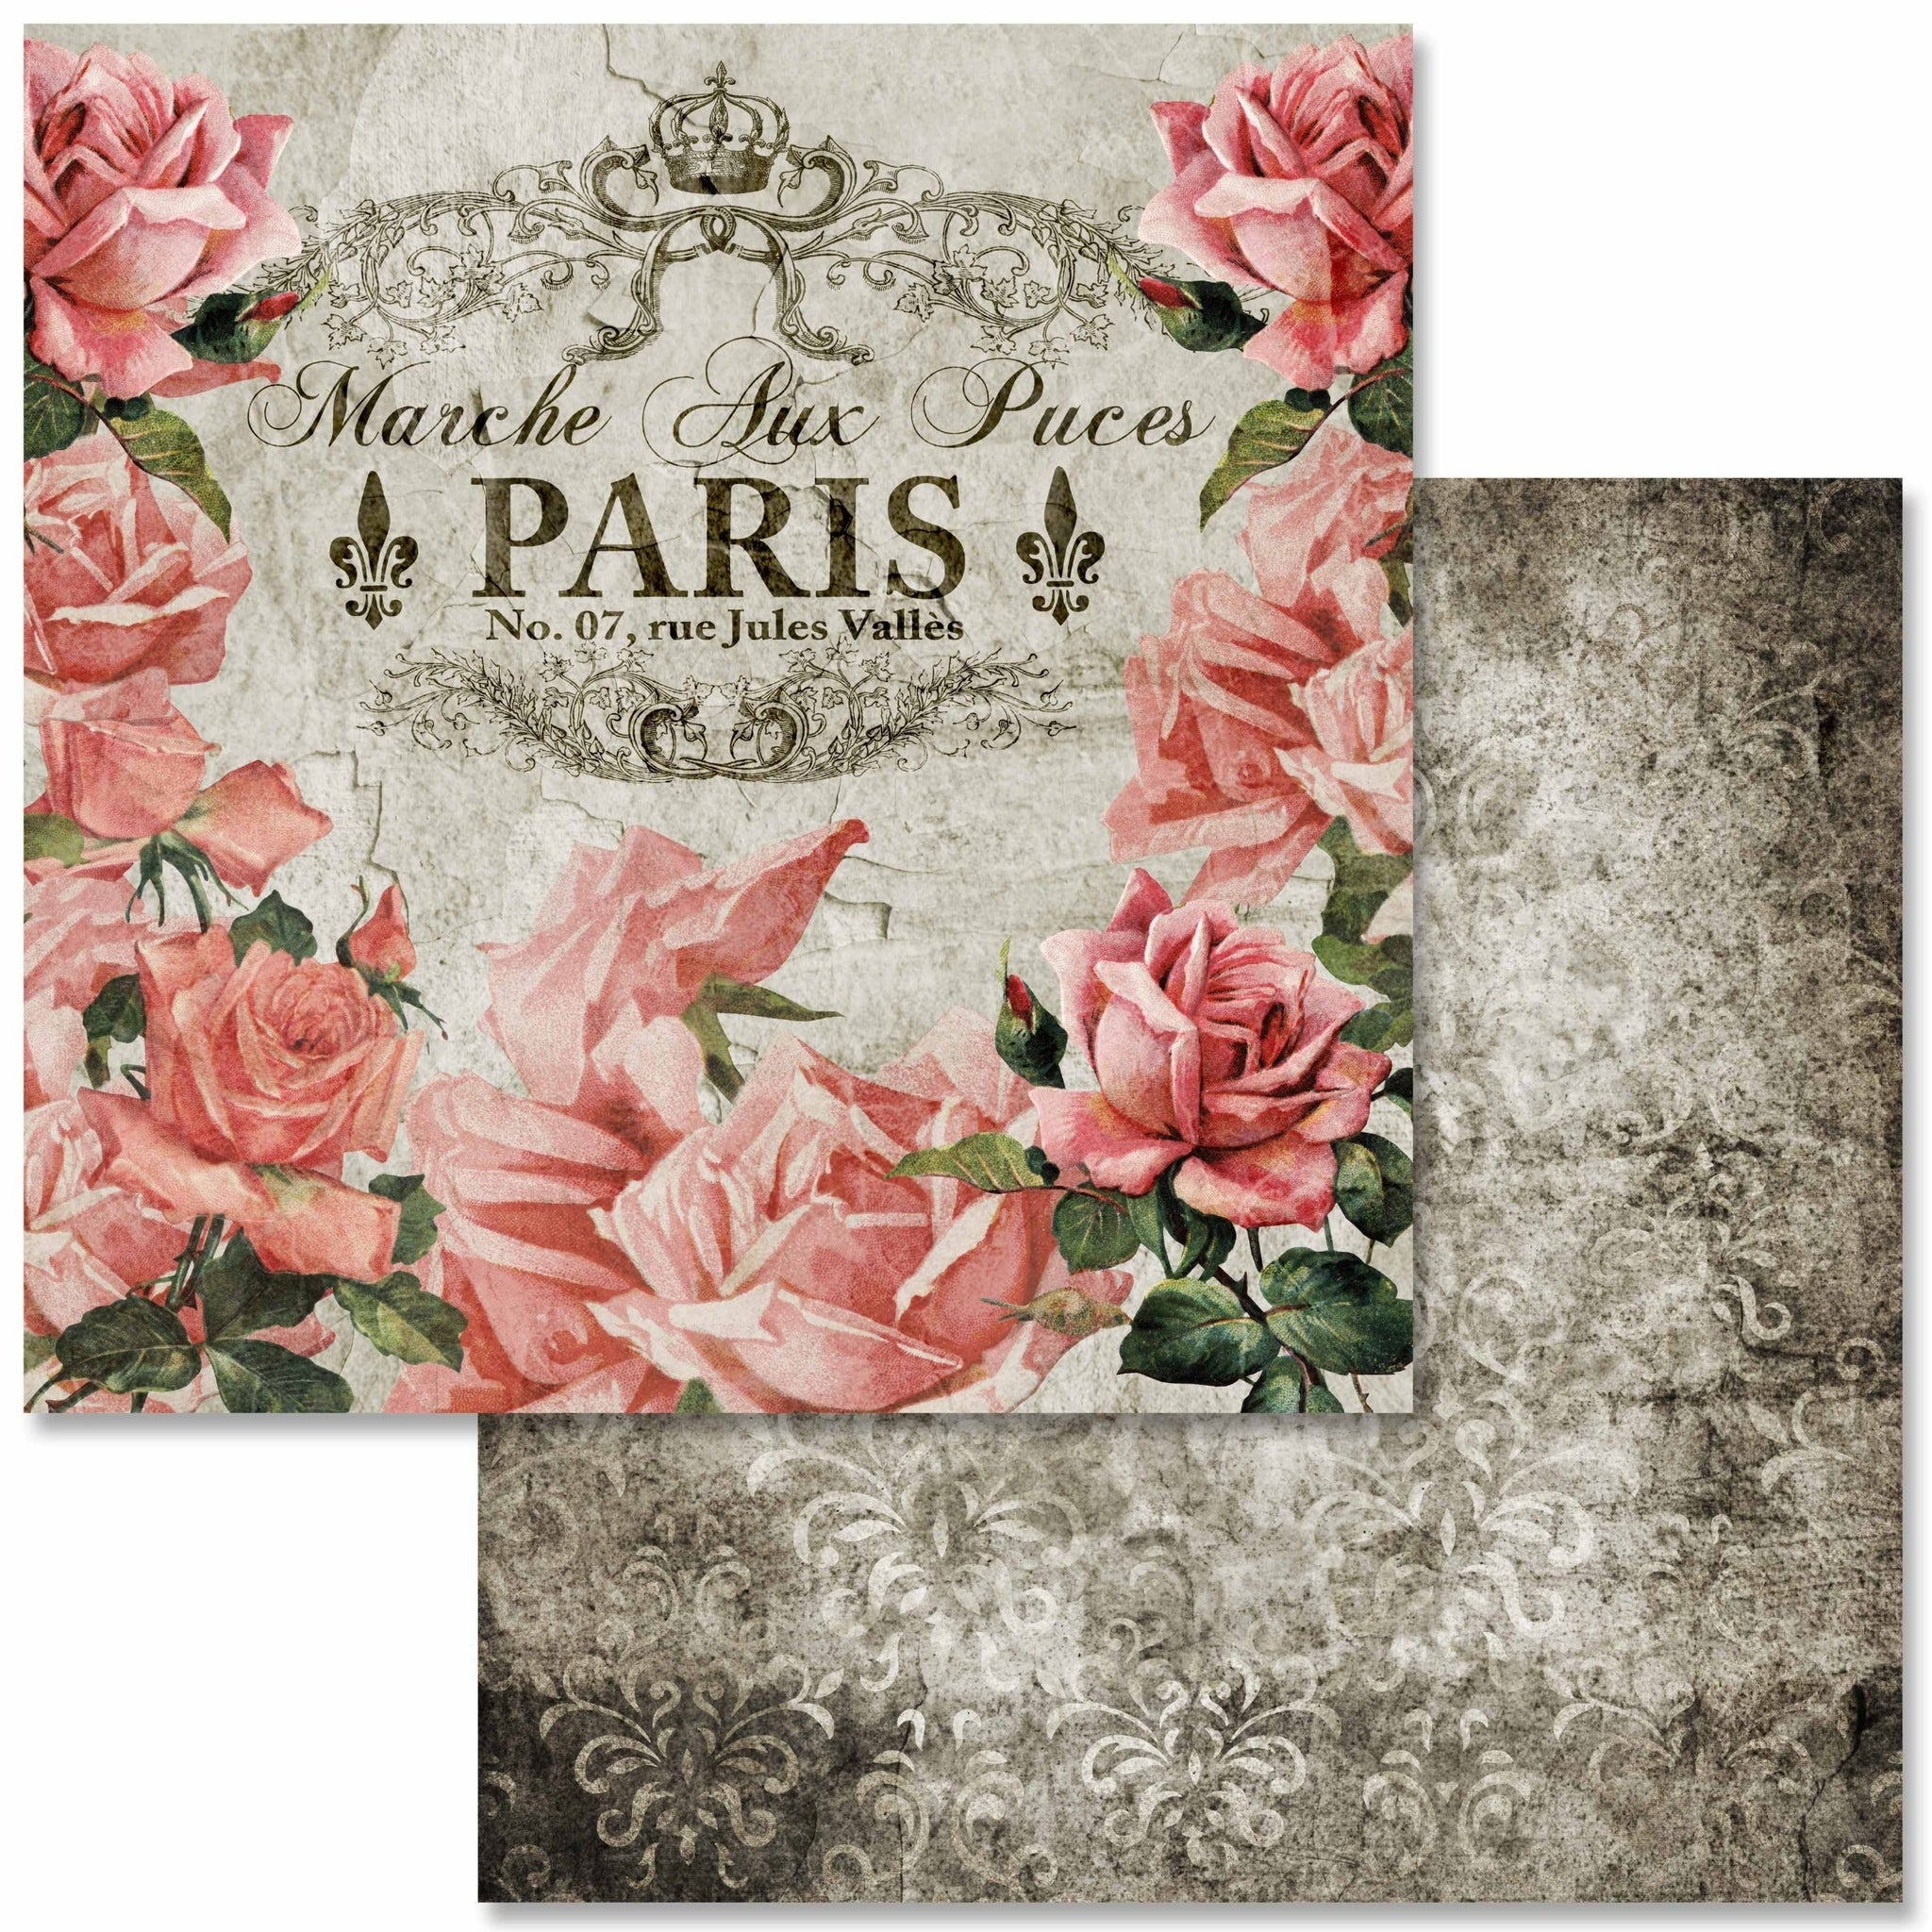 Antique Roses Mini Scrapbook Set by Decoupage Queen, 6 x 6 – My Victorian  Heart